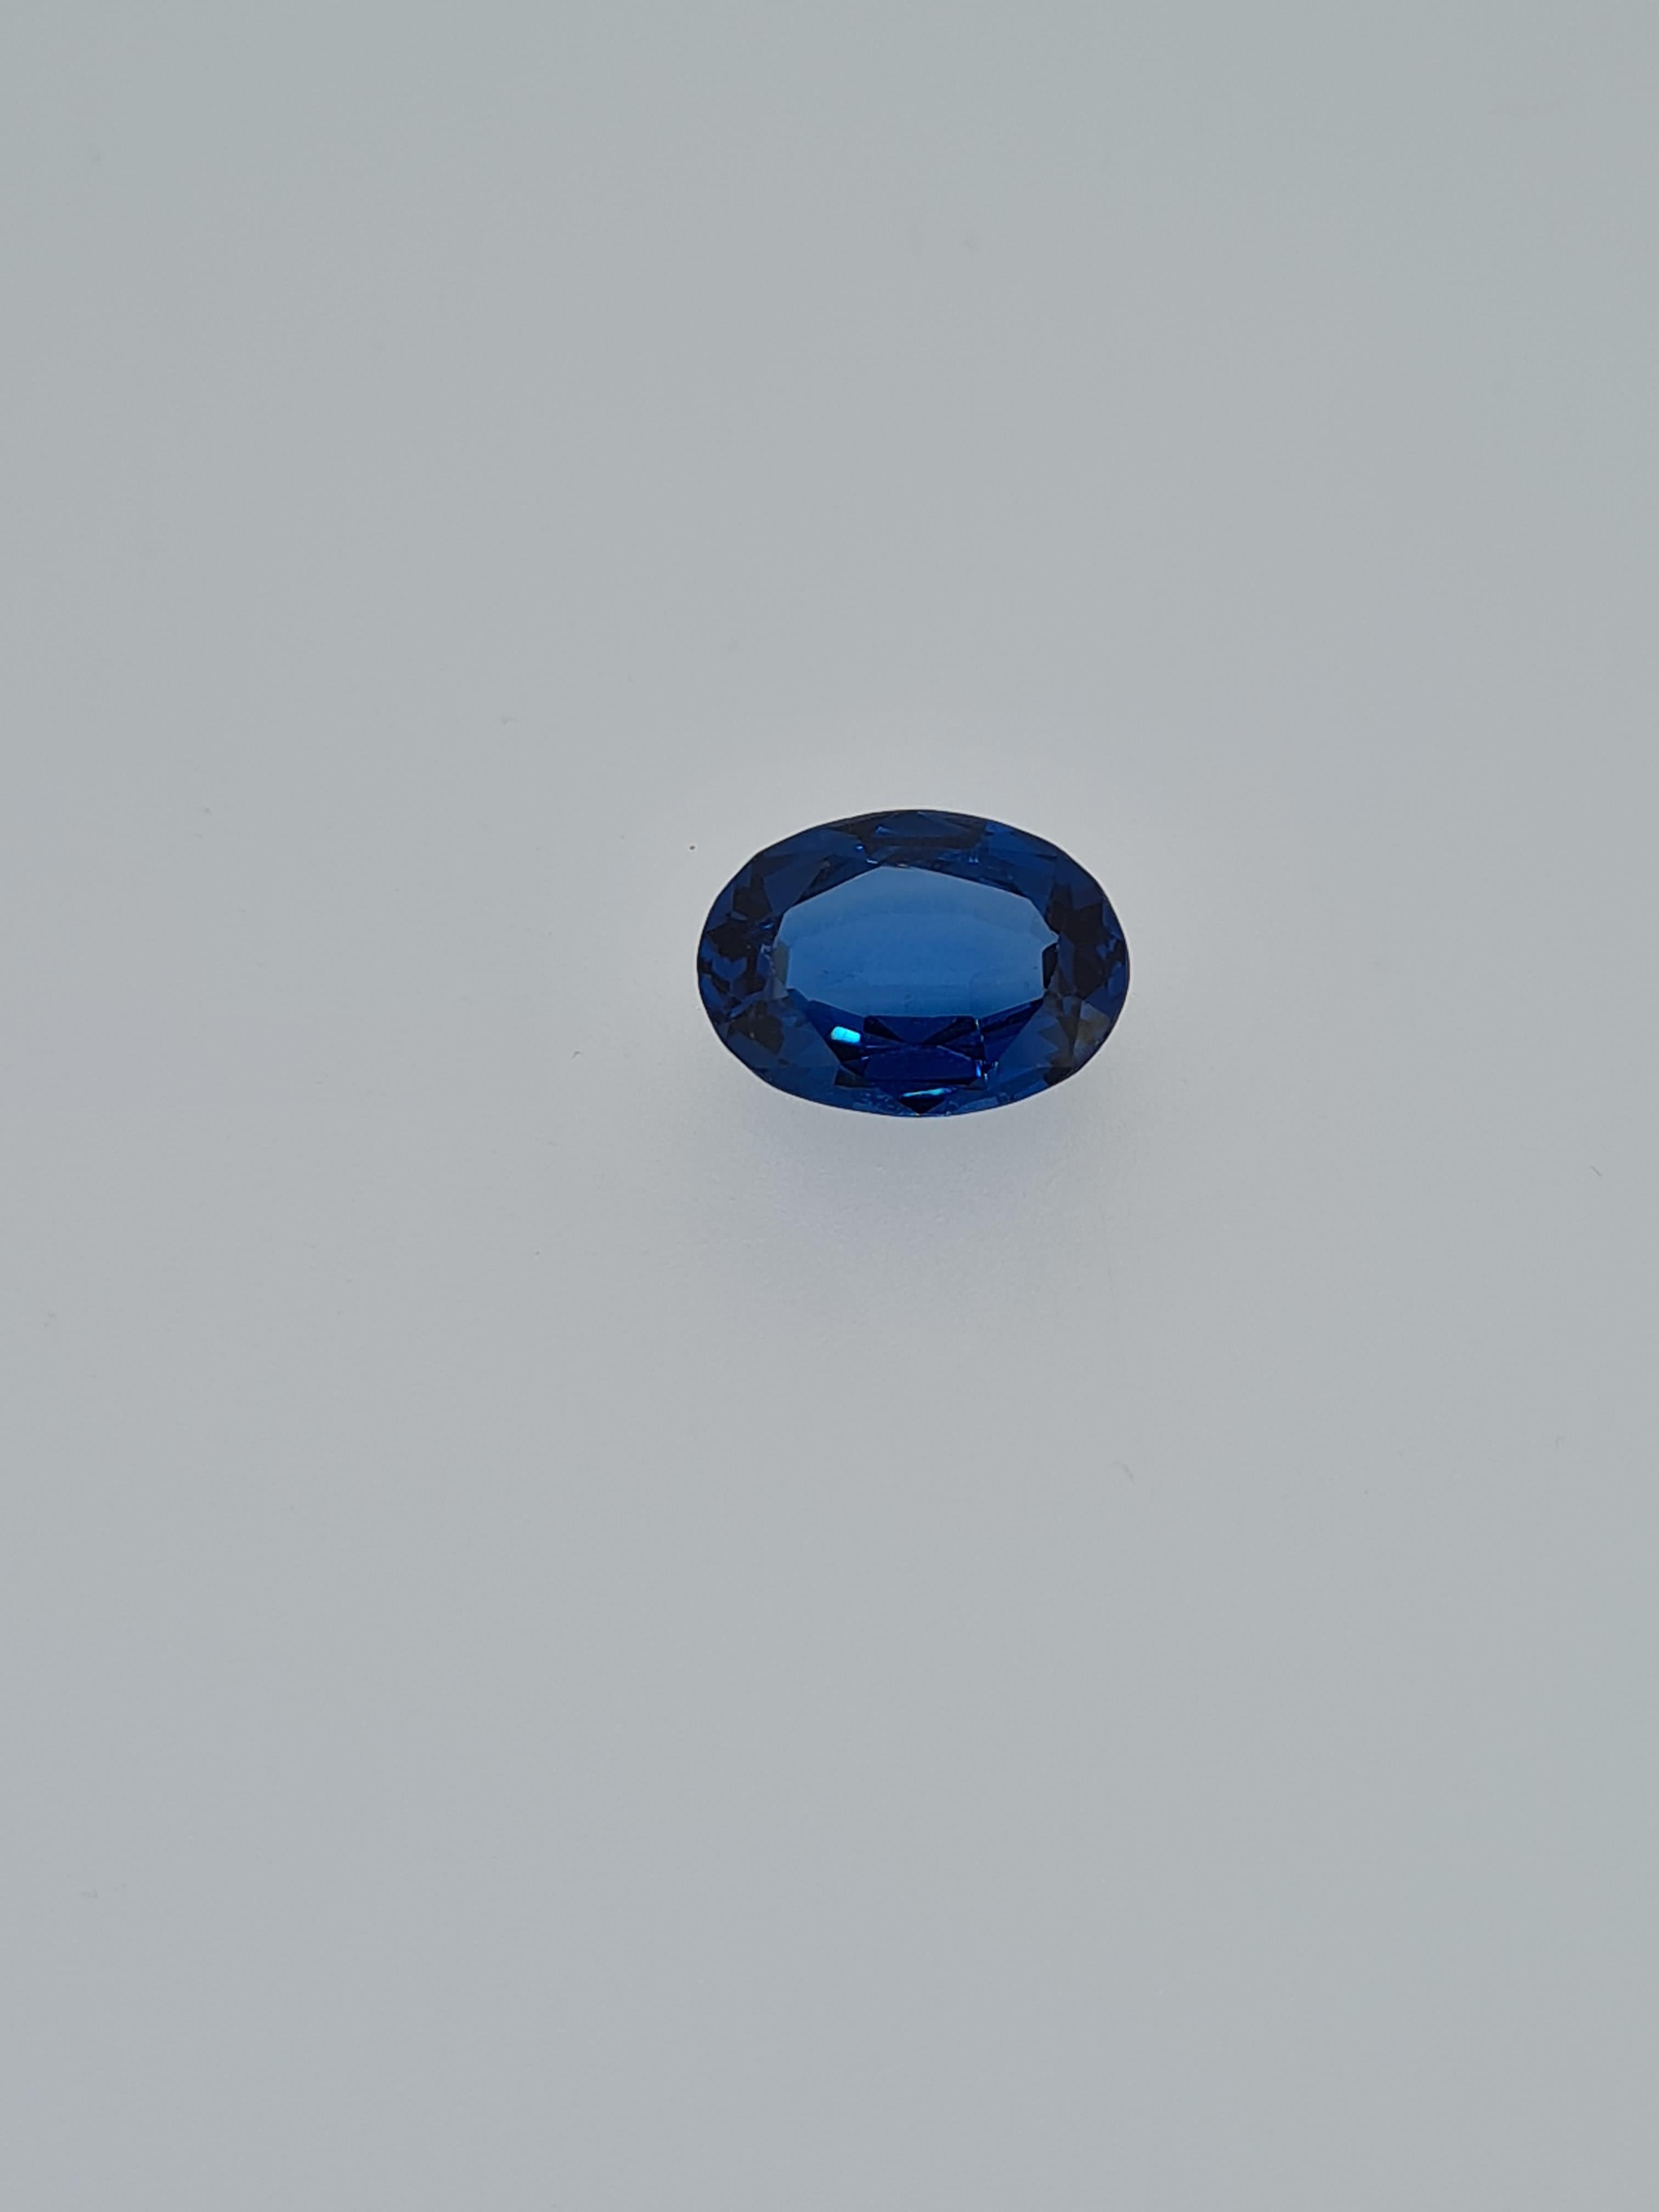 London blue topaz oval cut gem stone - Image 4 of 5